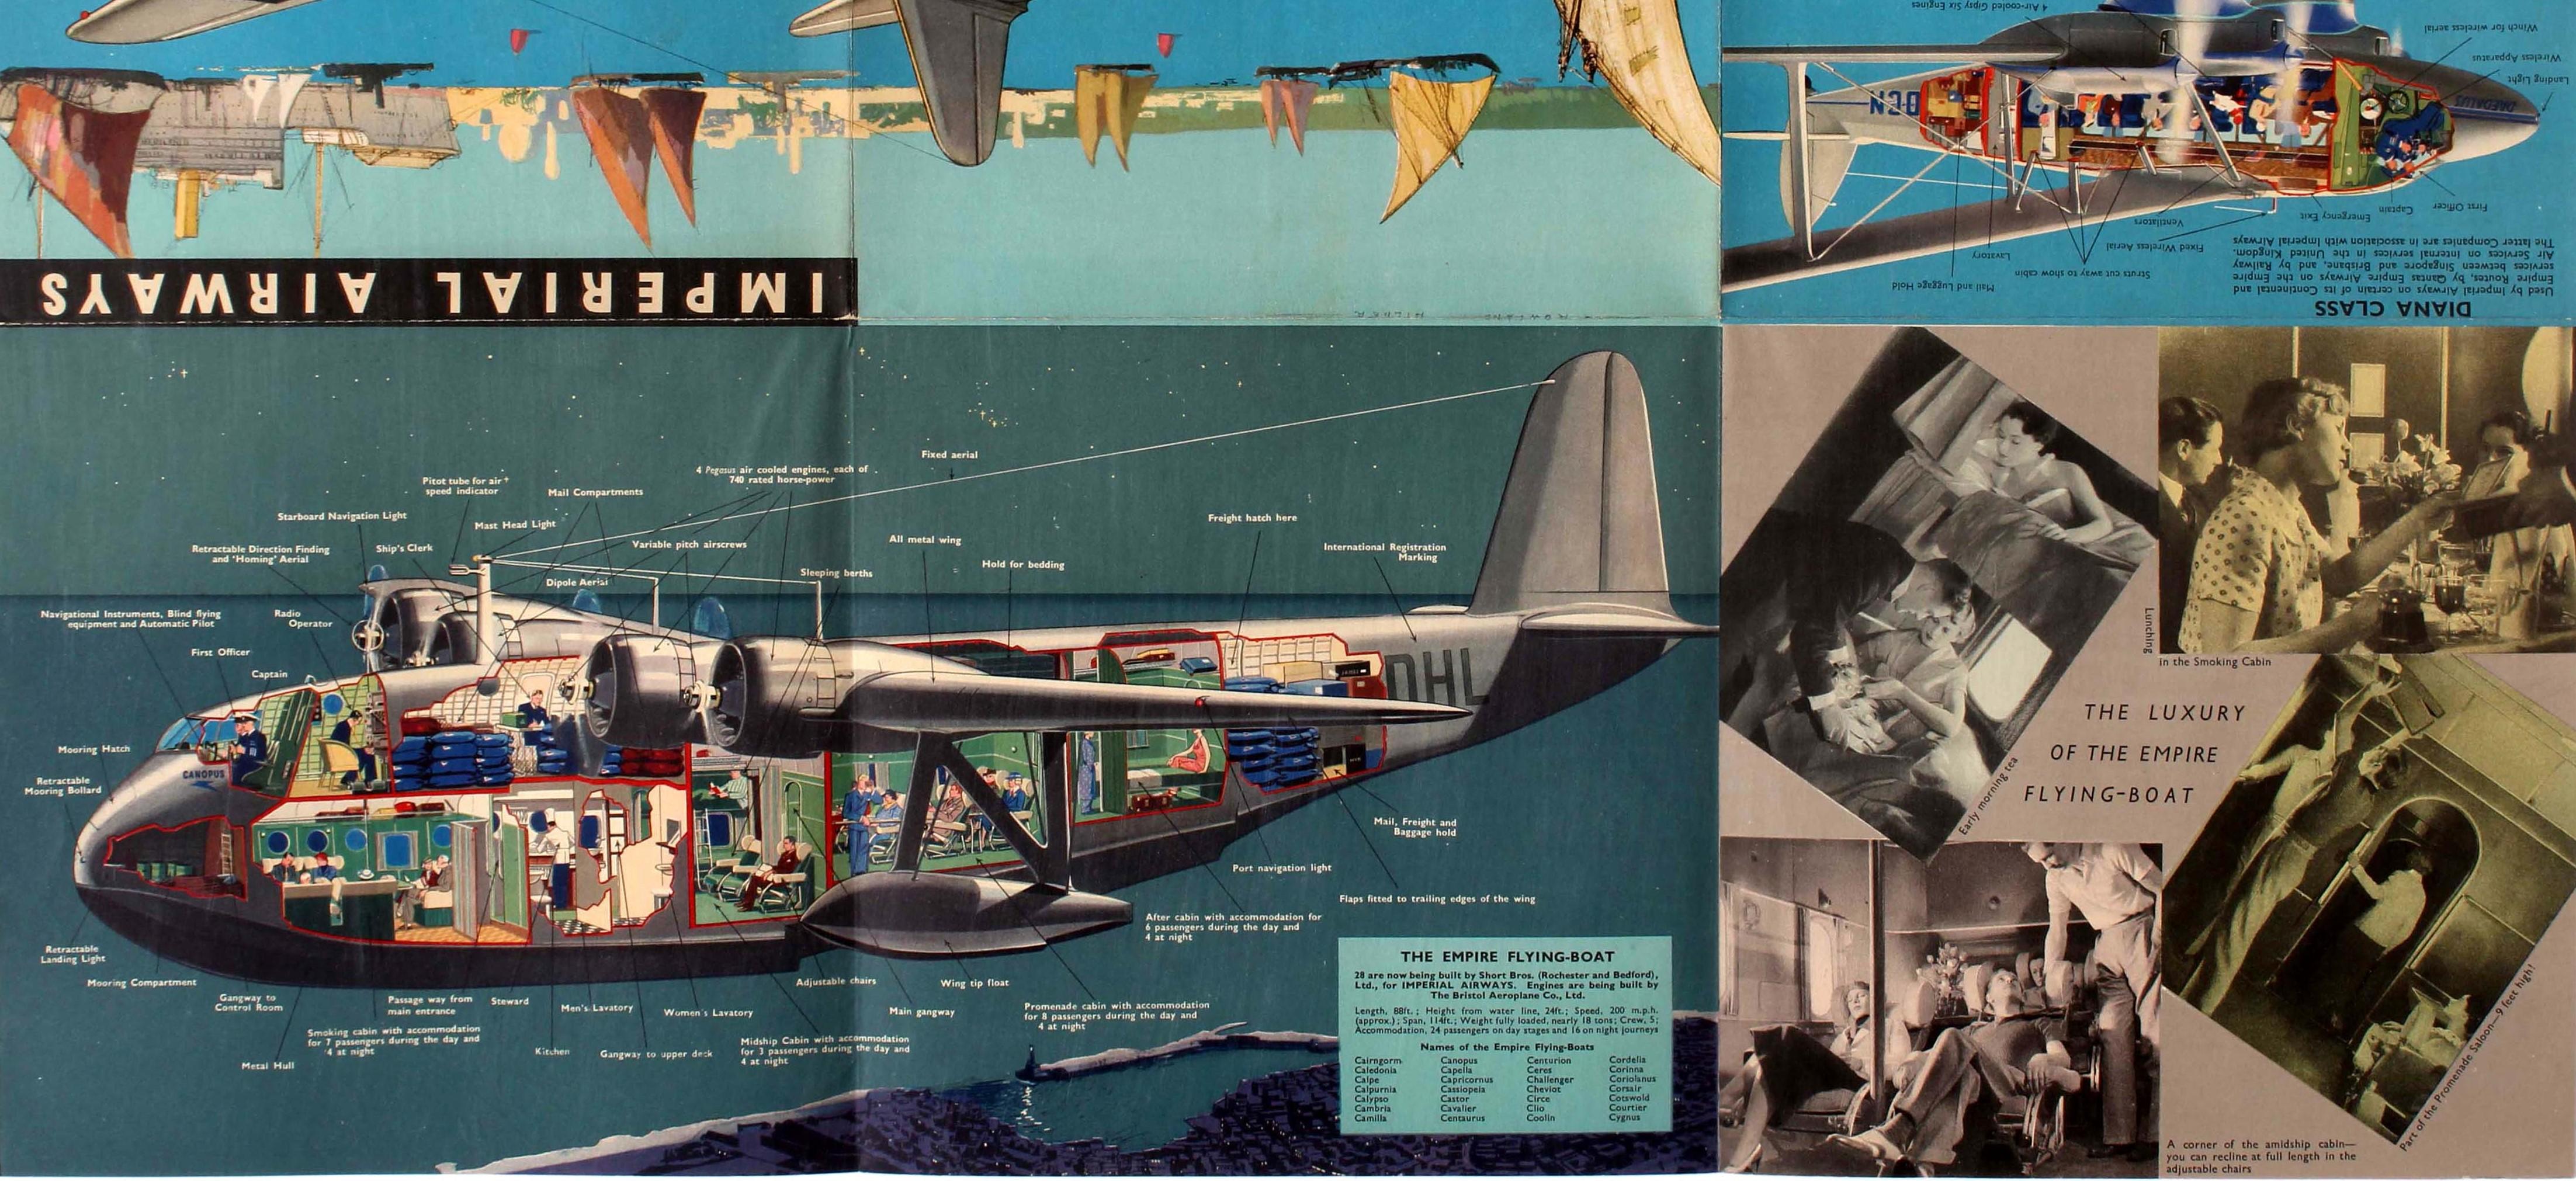 British Original Vintage Imperial Airways Travel Brochure Poster Flying Boat Land Planes For Sale